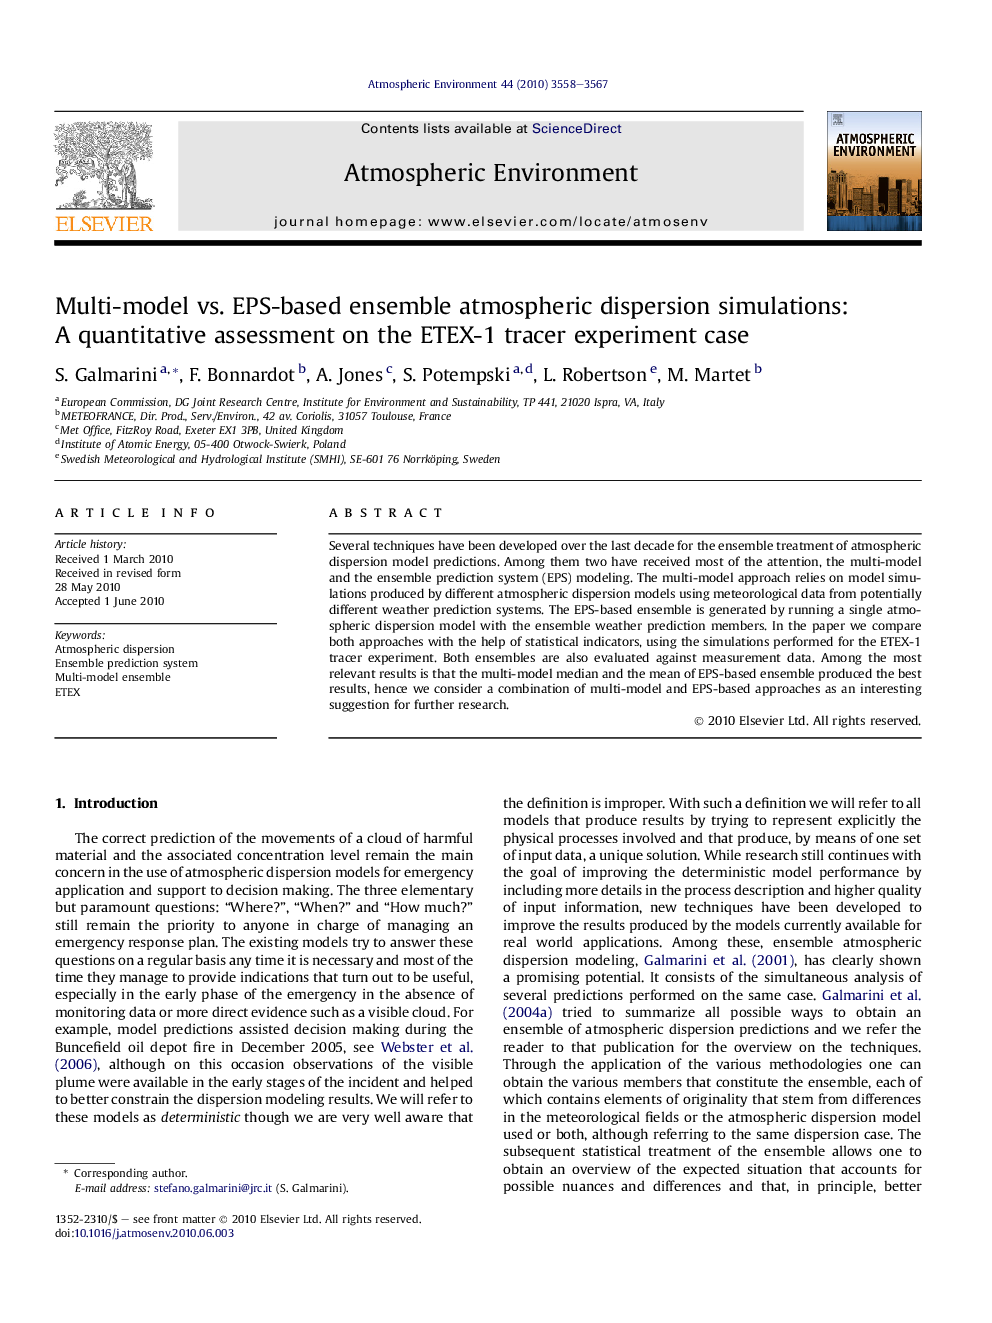 Multi-model vs. EPS-based ensemble atmospheric dispersion simulations: A quantitative assessment on the ETEX-1 tracer experiment case